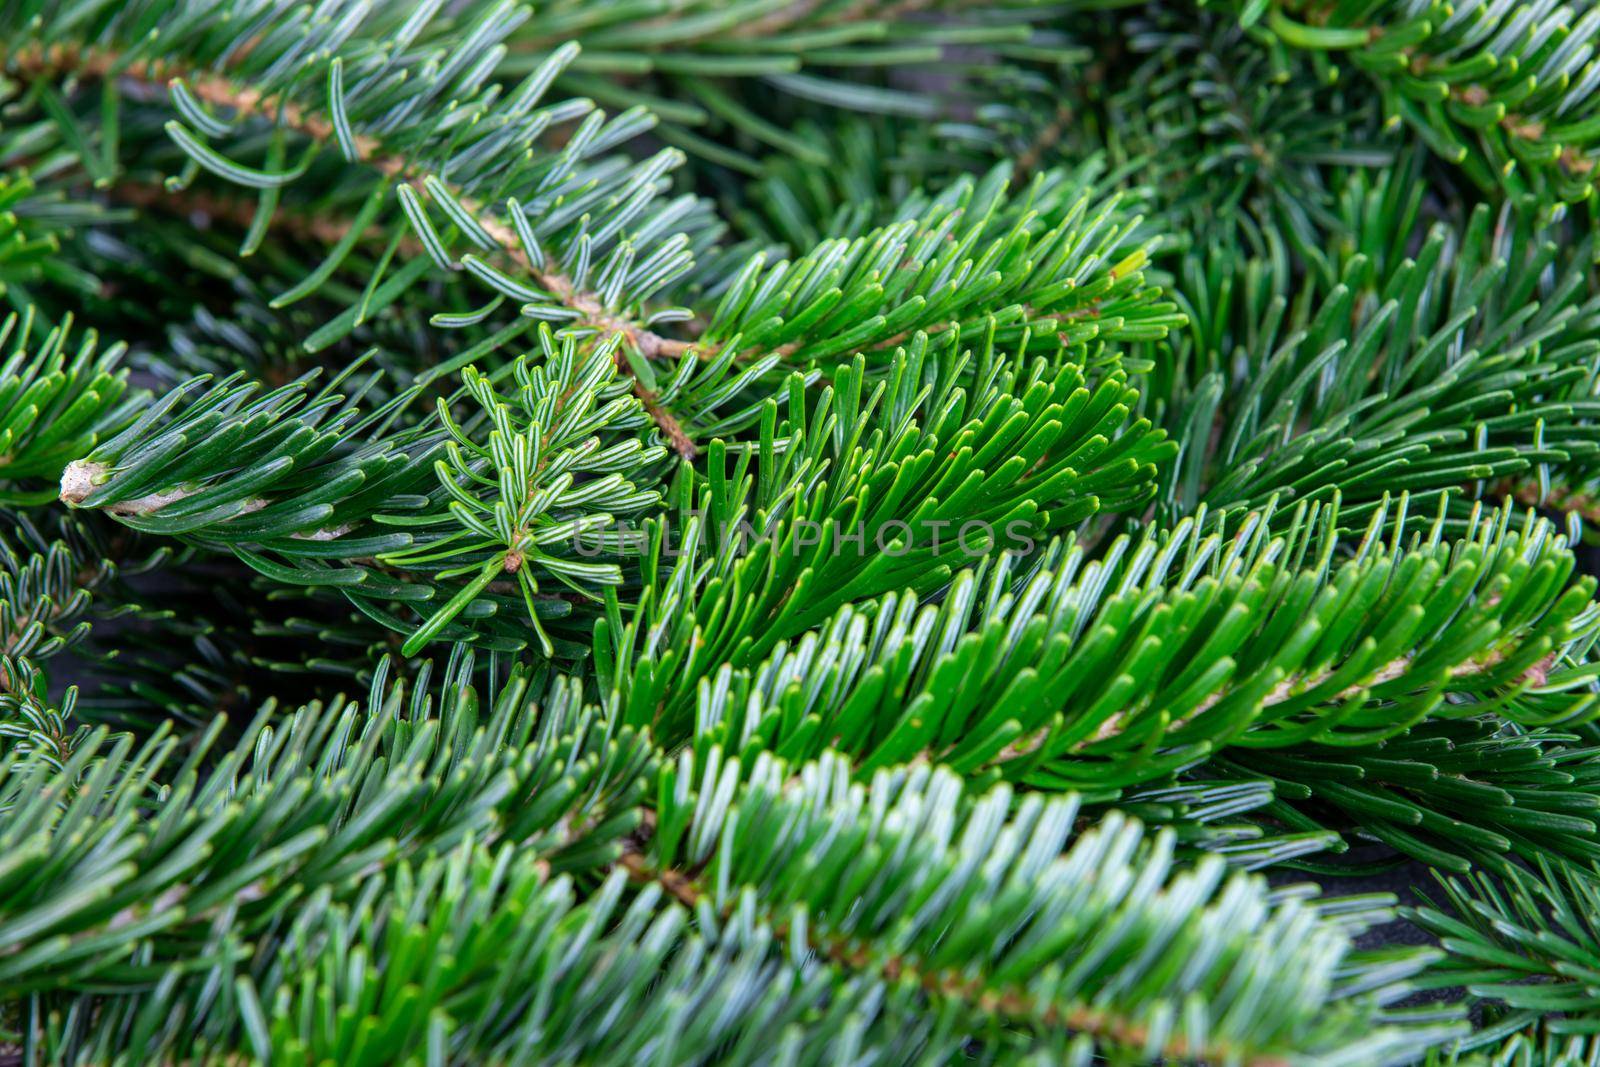 Christmas motif, texture, background with Nordmann fir branches by reinerc